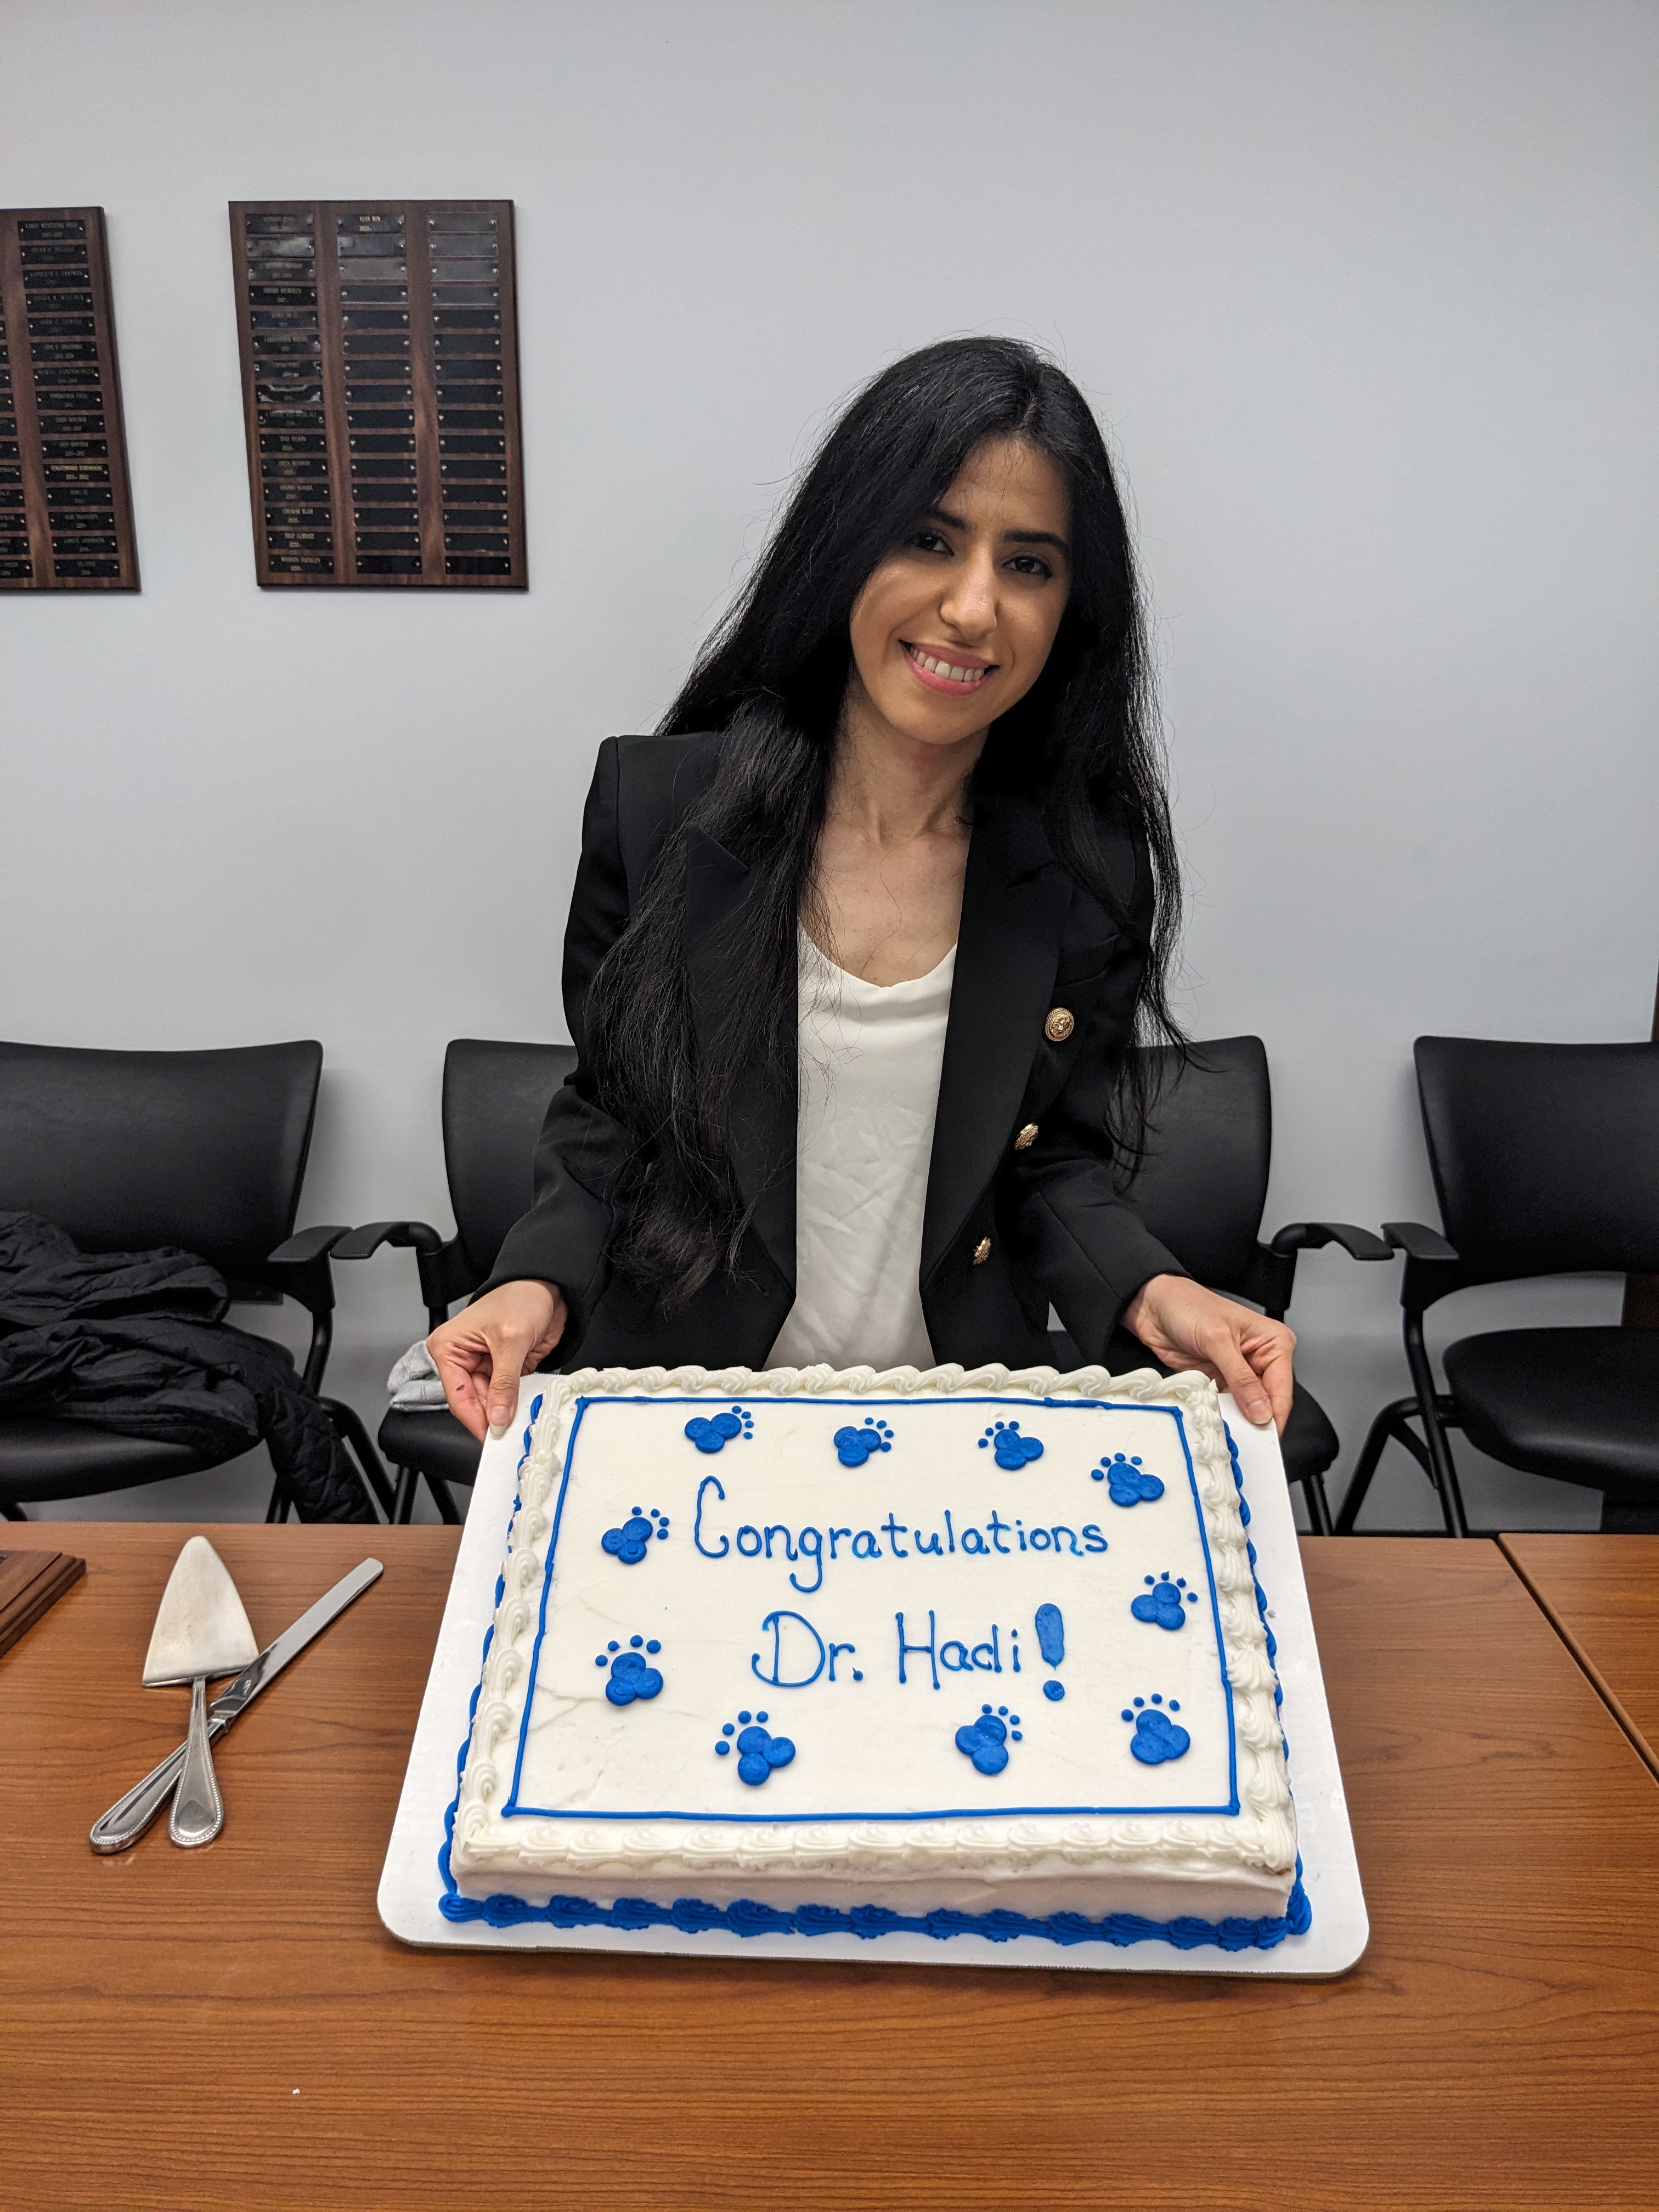 Shadan Hadi holding a cake that says "Congratulations Dr. Hadi!"